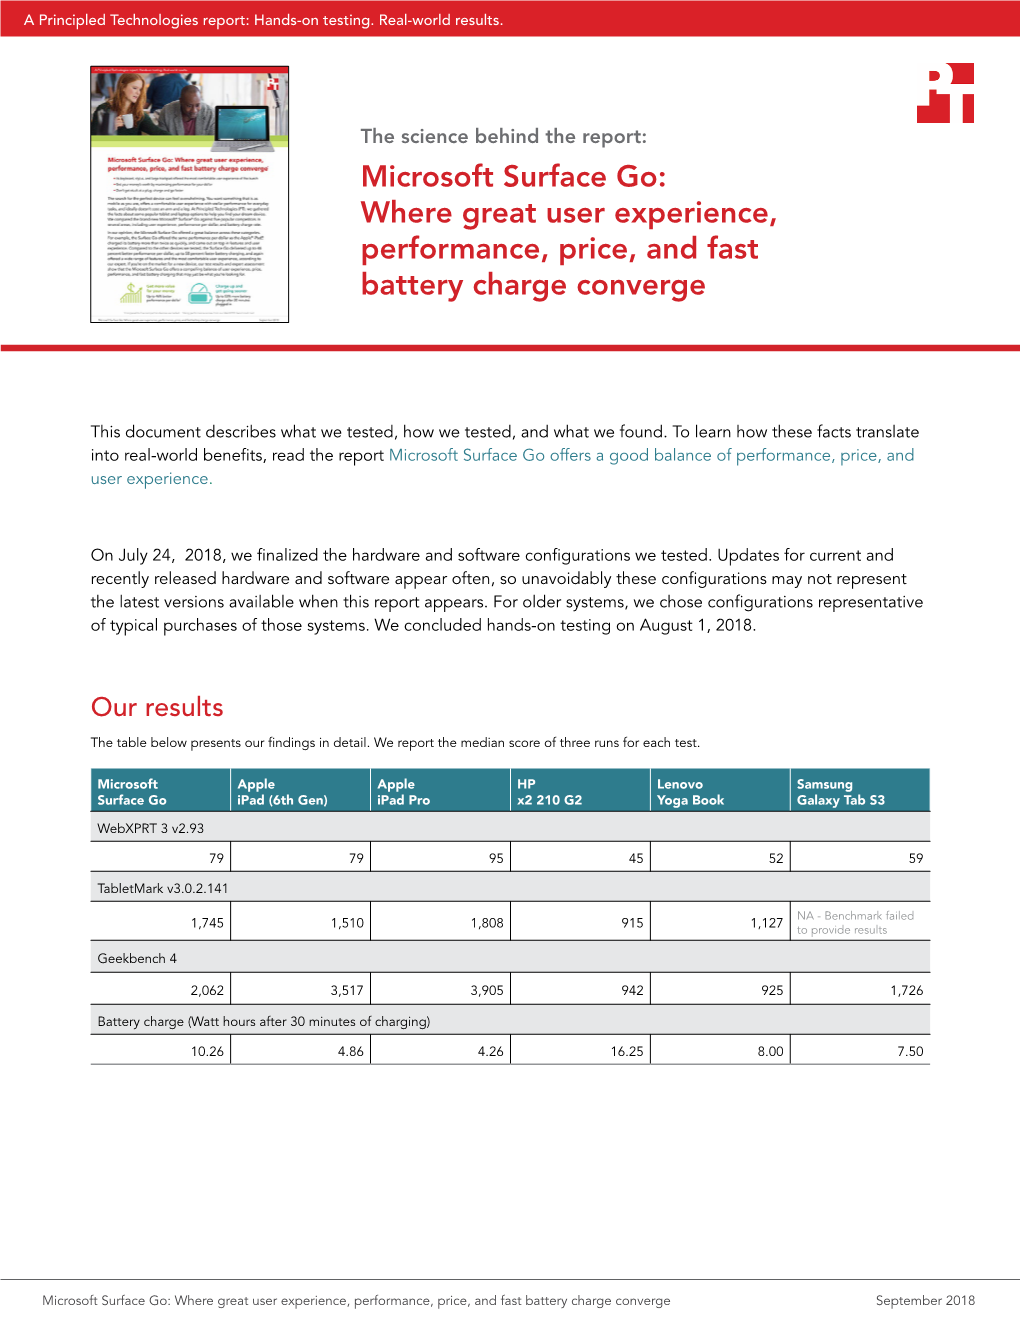 Microsoft Surface Go Benchmark Testing Comparison Science